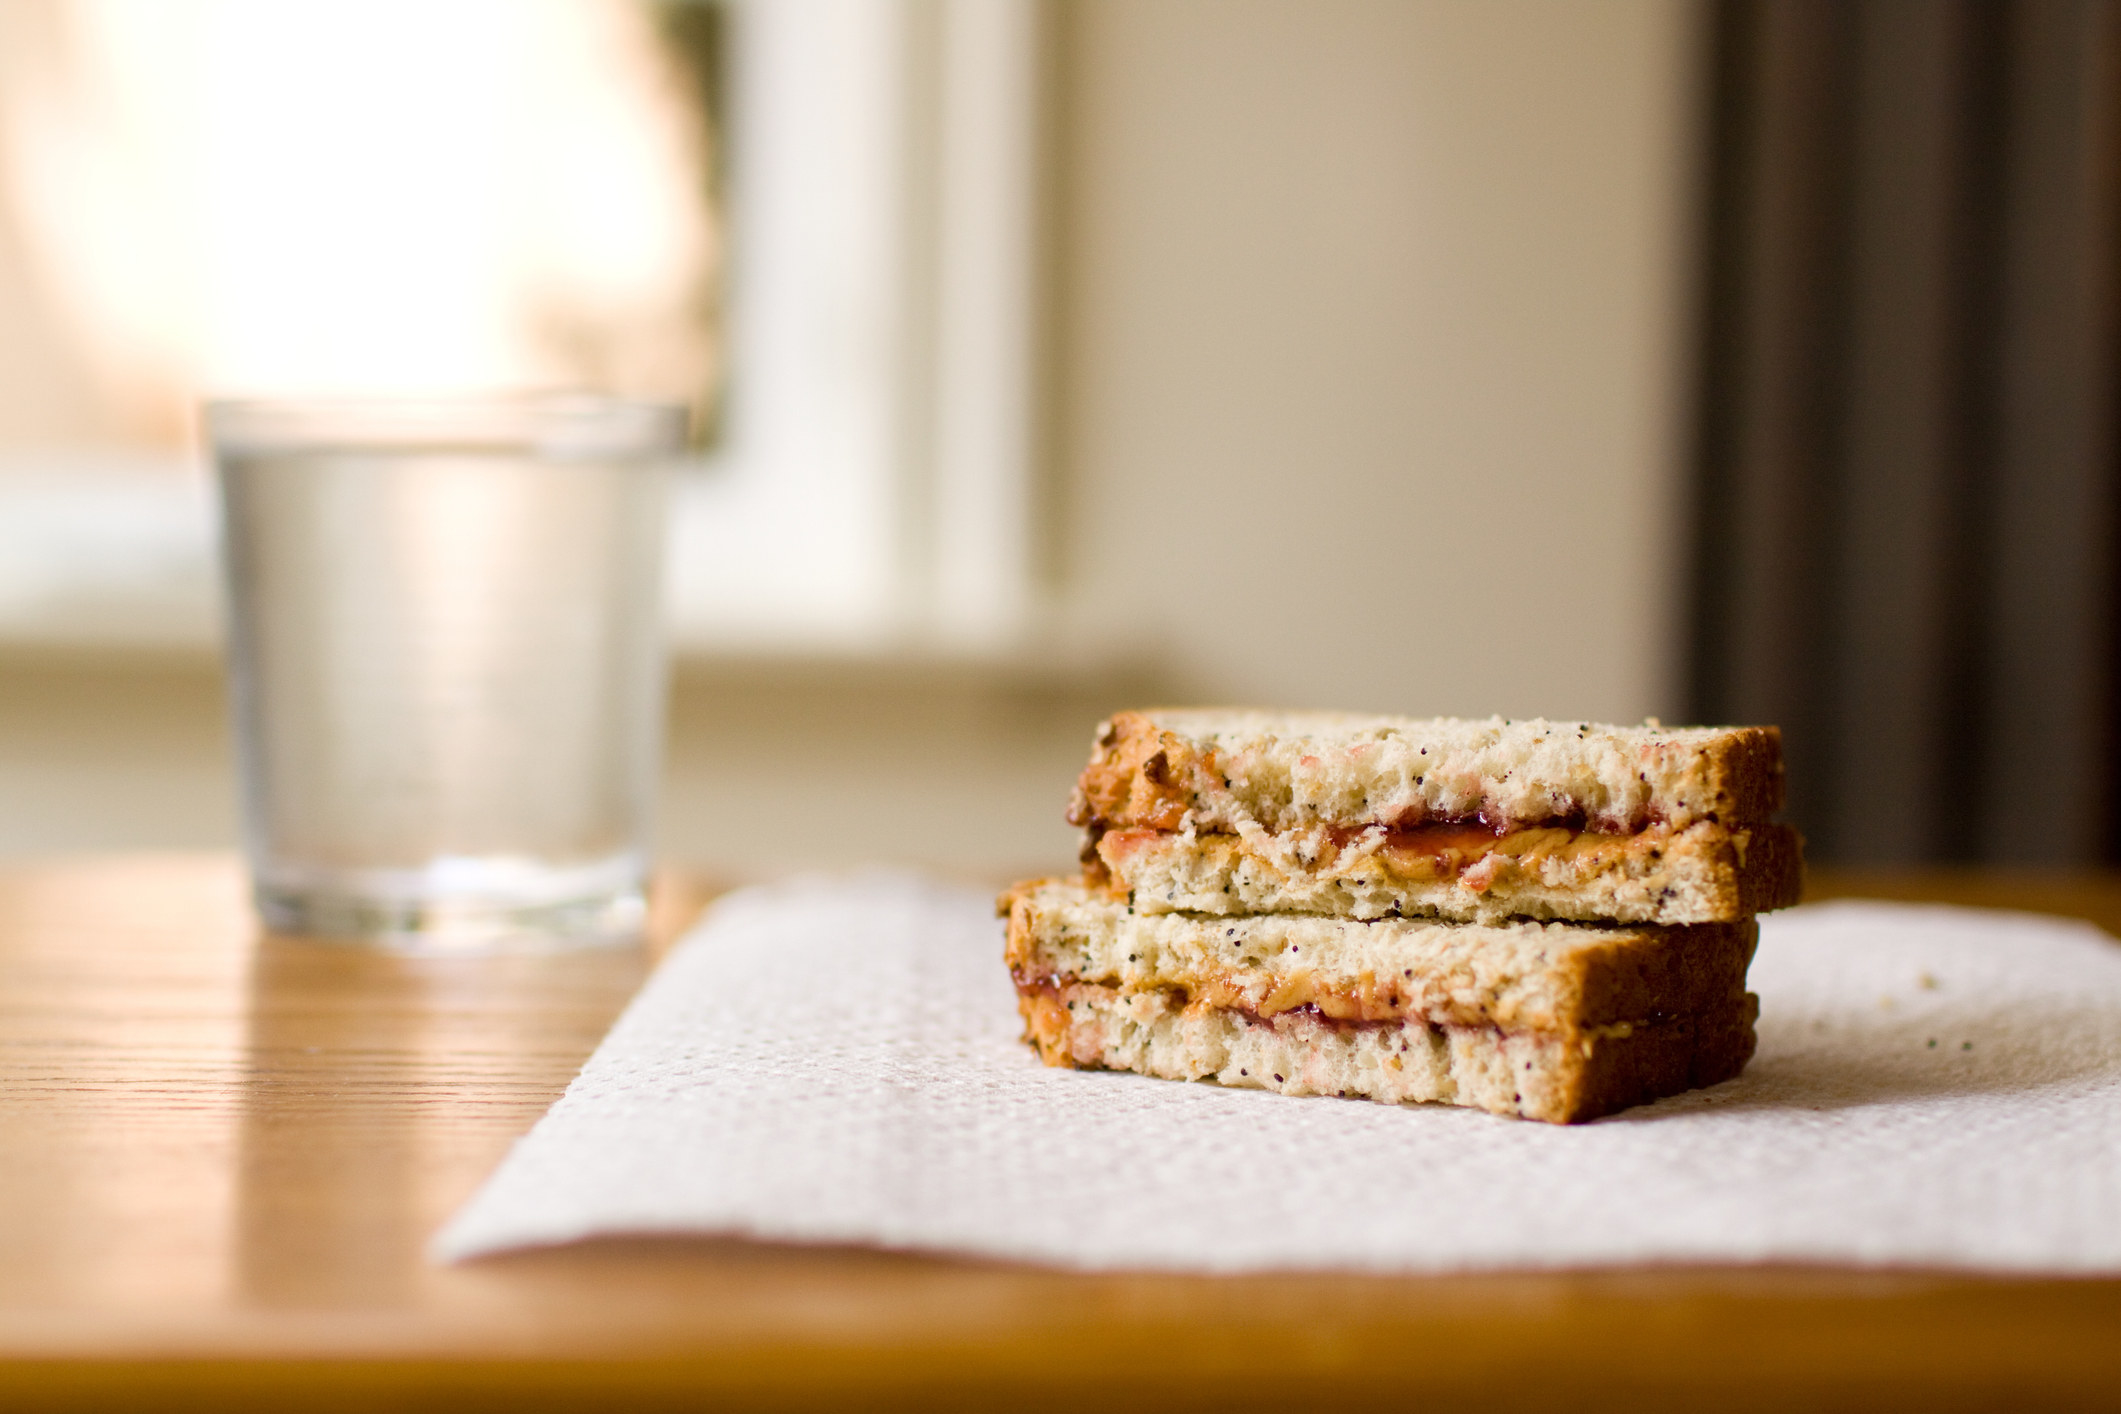 A sliced peanut butter sandwich on a napkin.